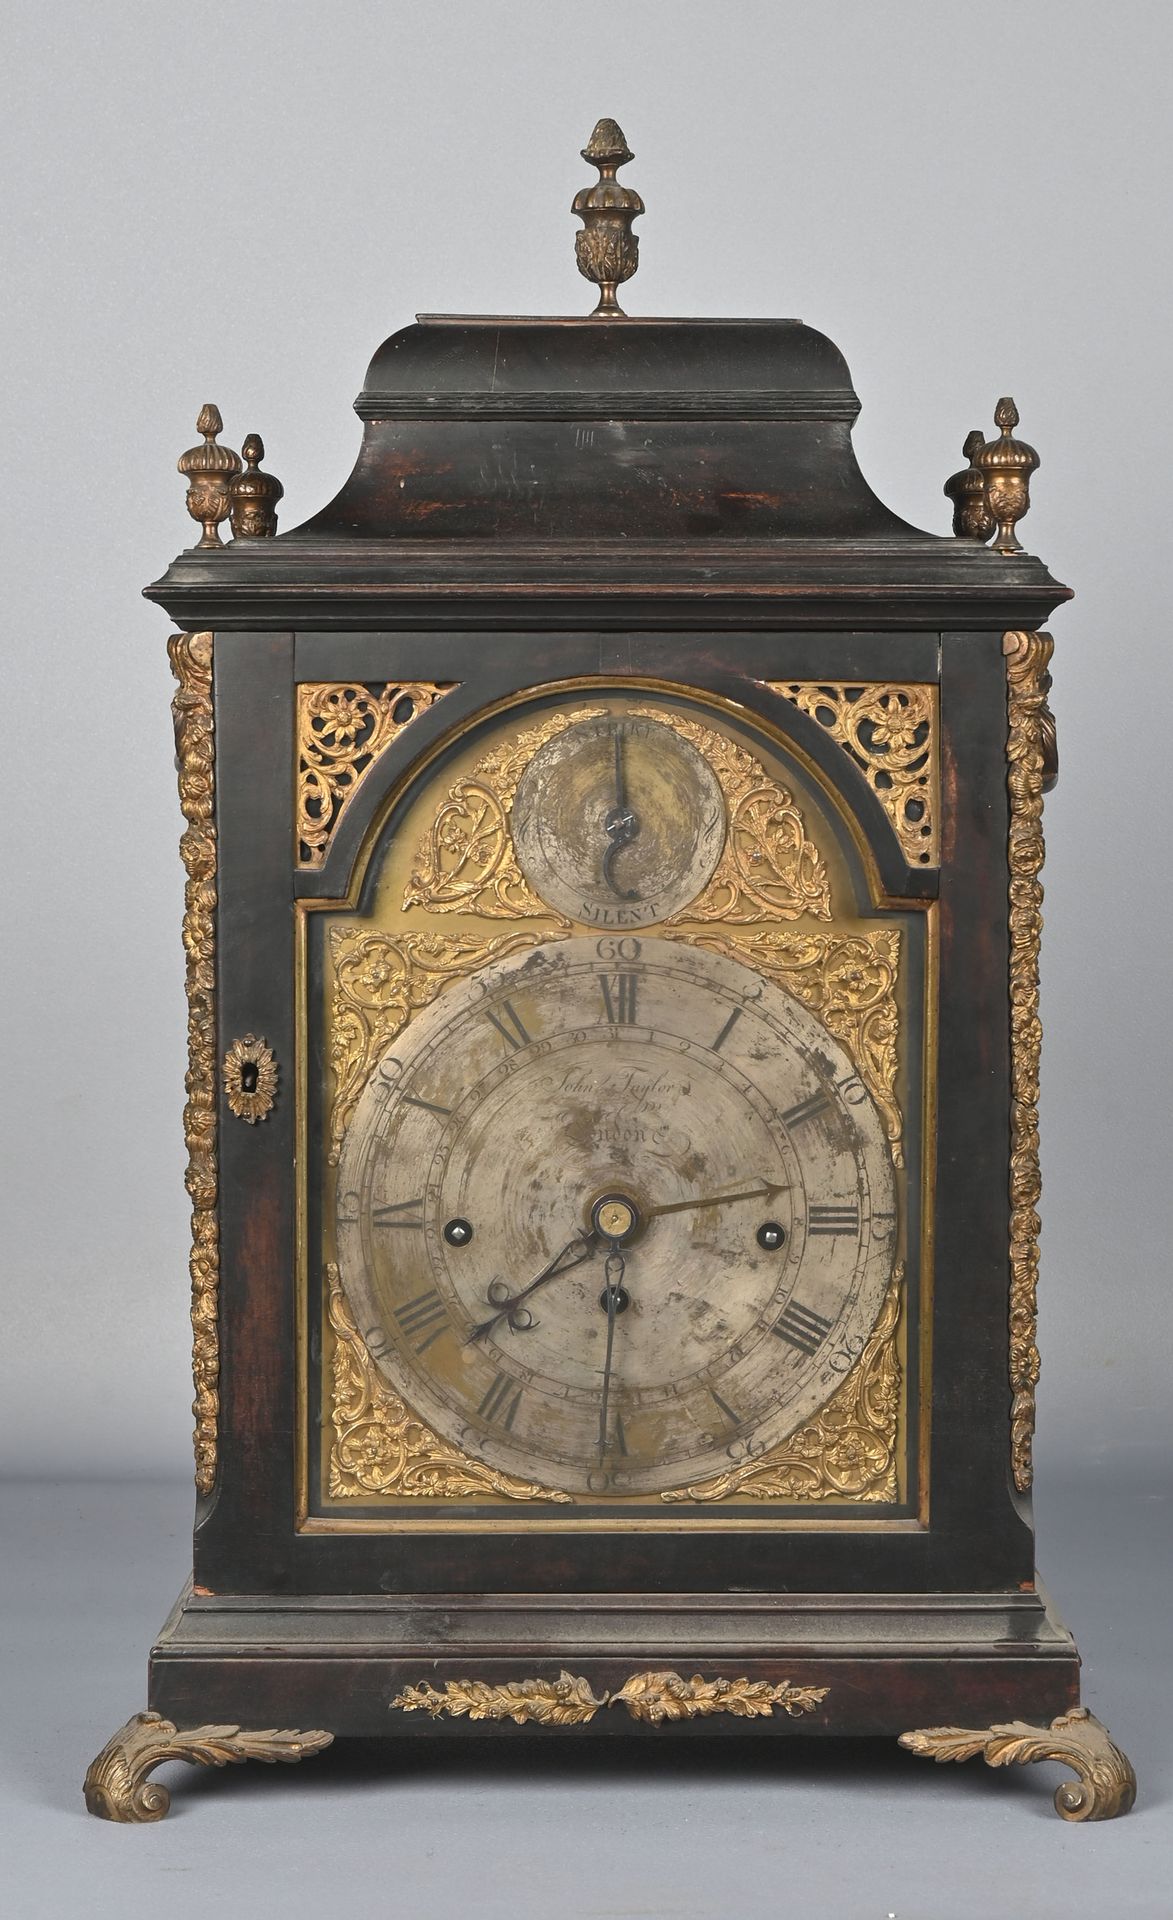 Null 发黑的木头、青铜和黄铜台钟
表盘上有罗马数字，标有约翰-泰勒伦敦，有重复的痕迹。英国作品，18世纪。
58 x 30,5 x 19厘米。